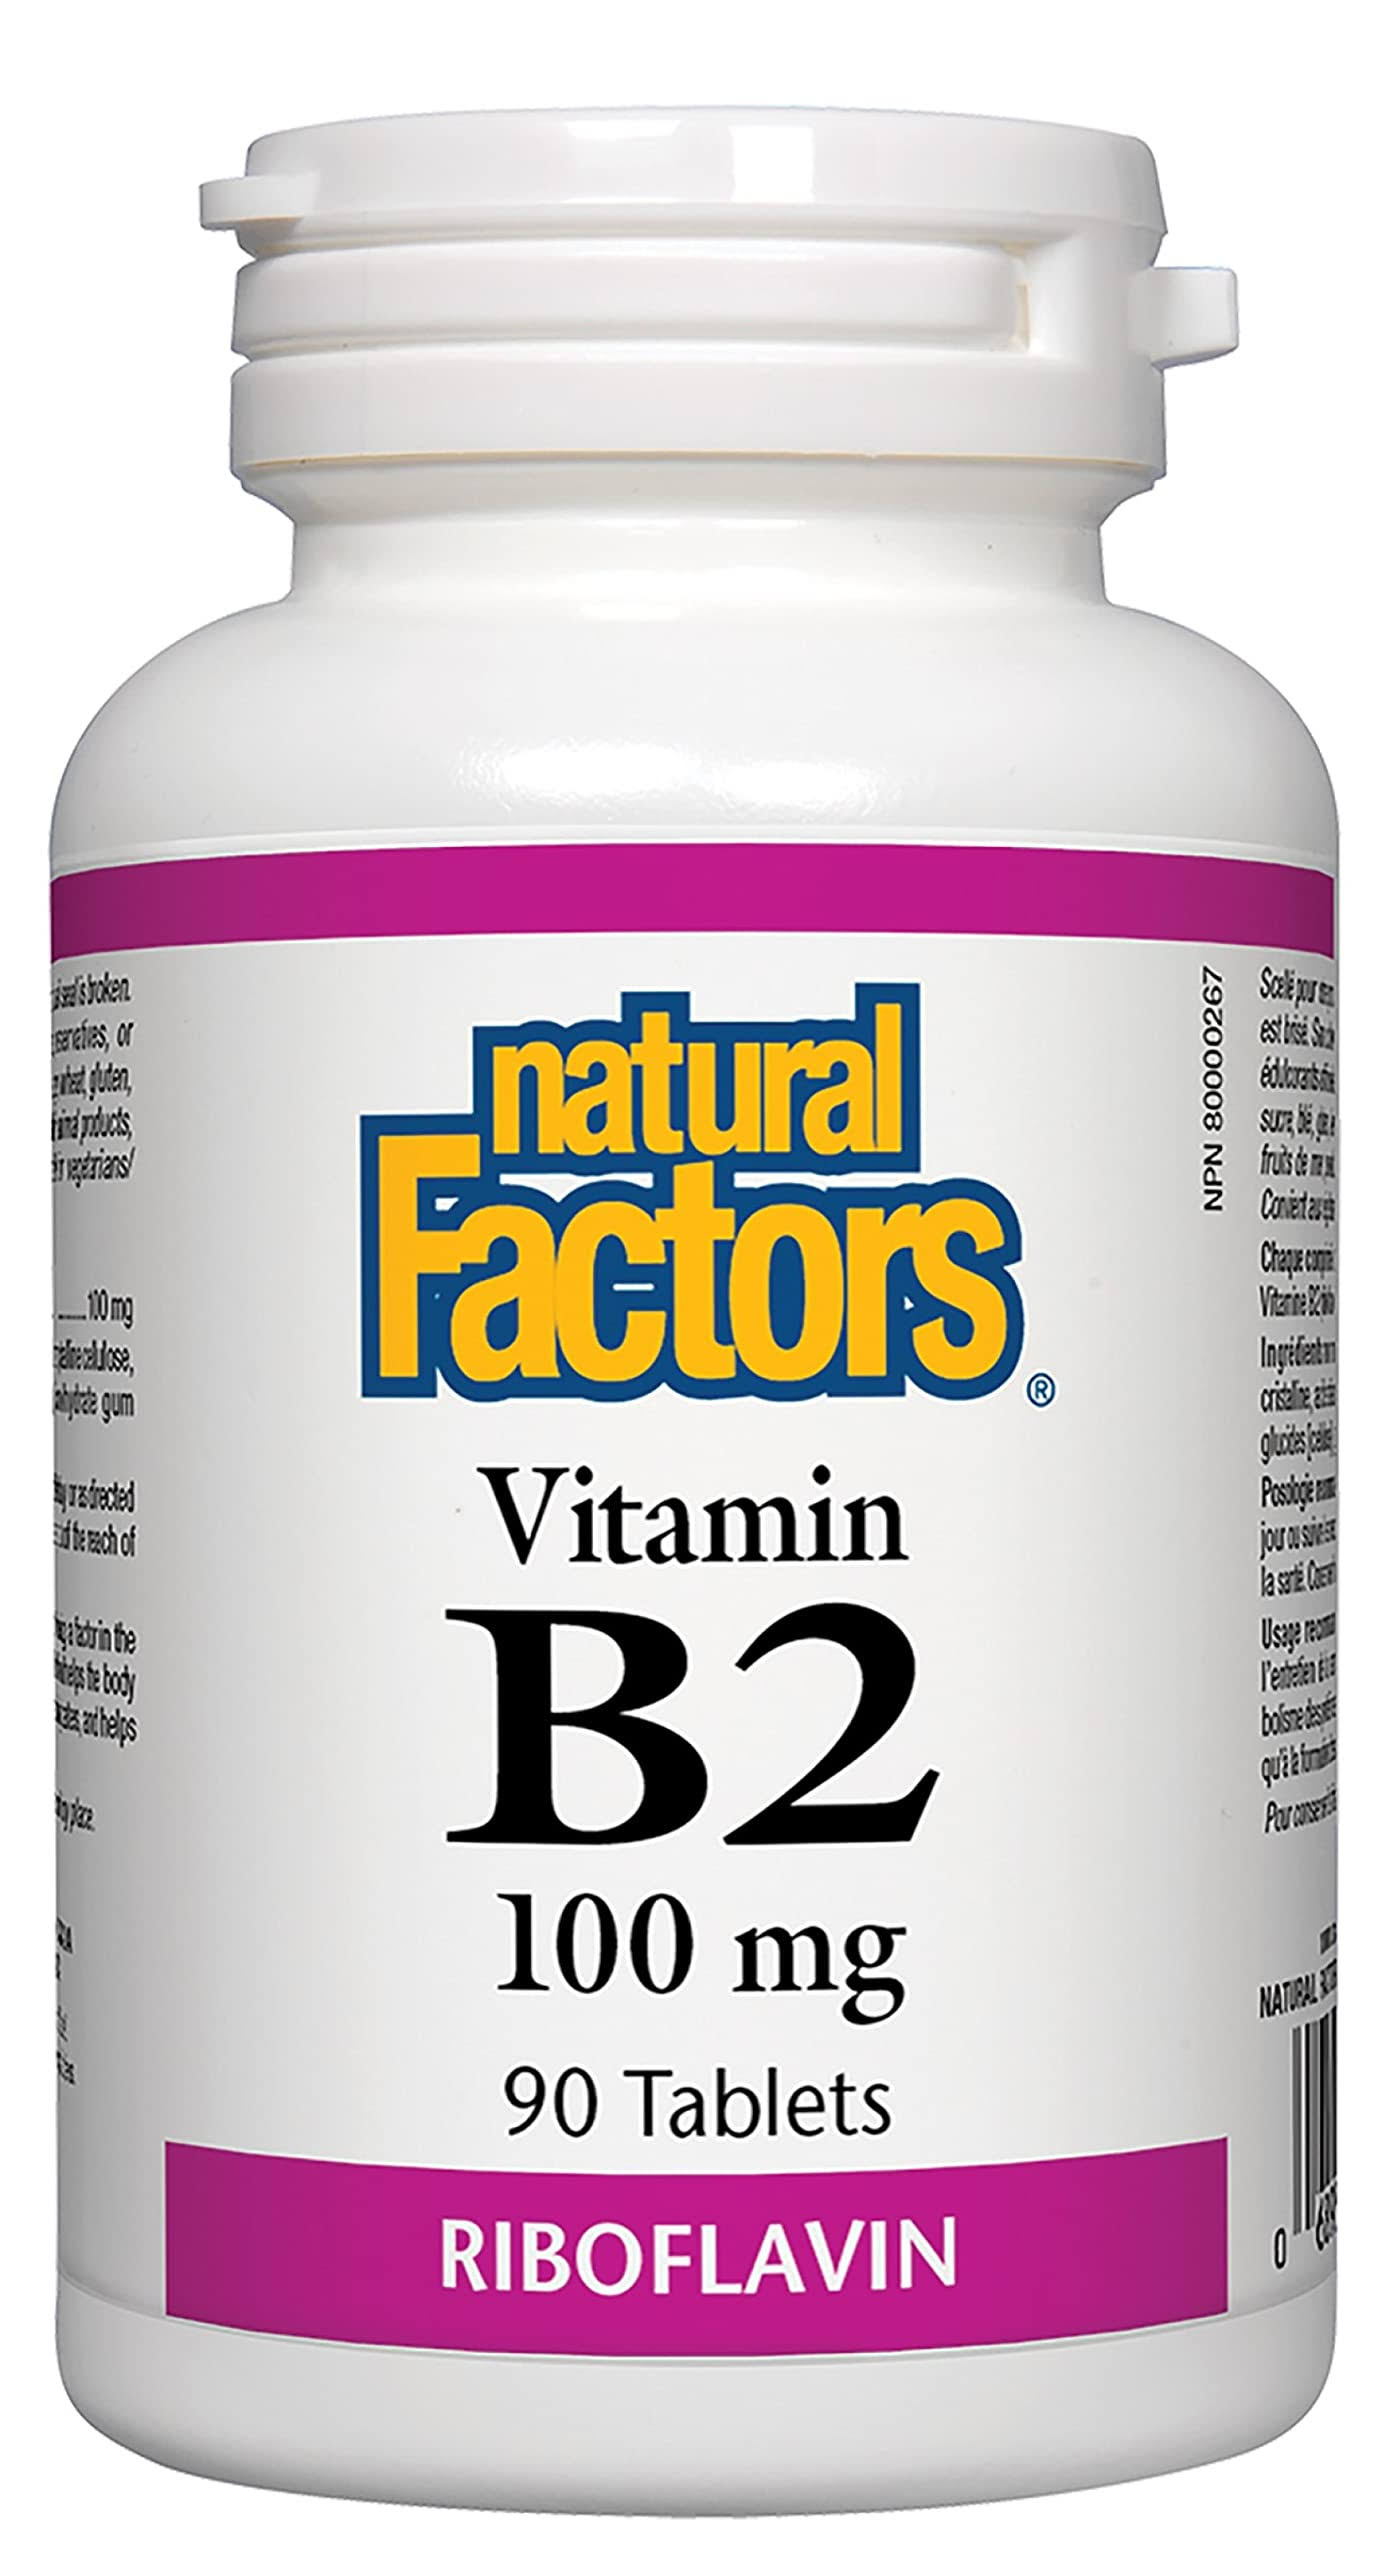 Natural Factors Vitamin B2 100 mg (90 Tablets)